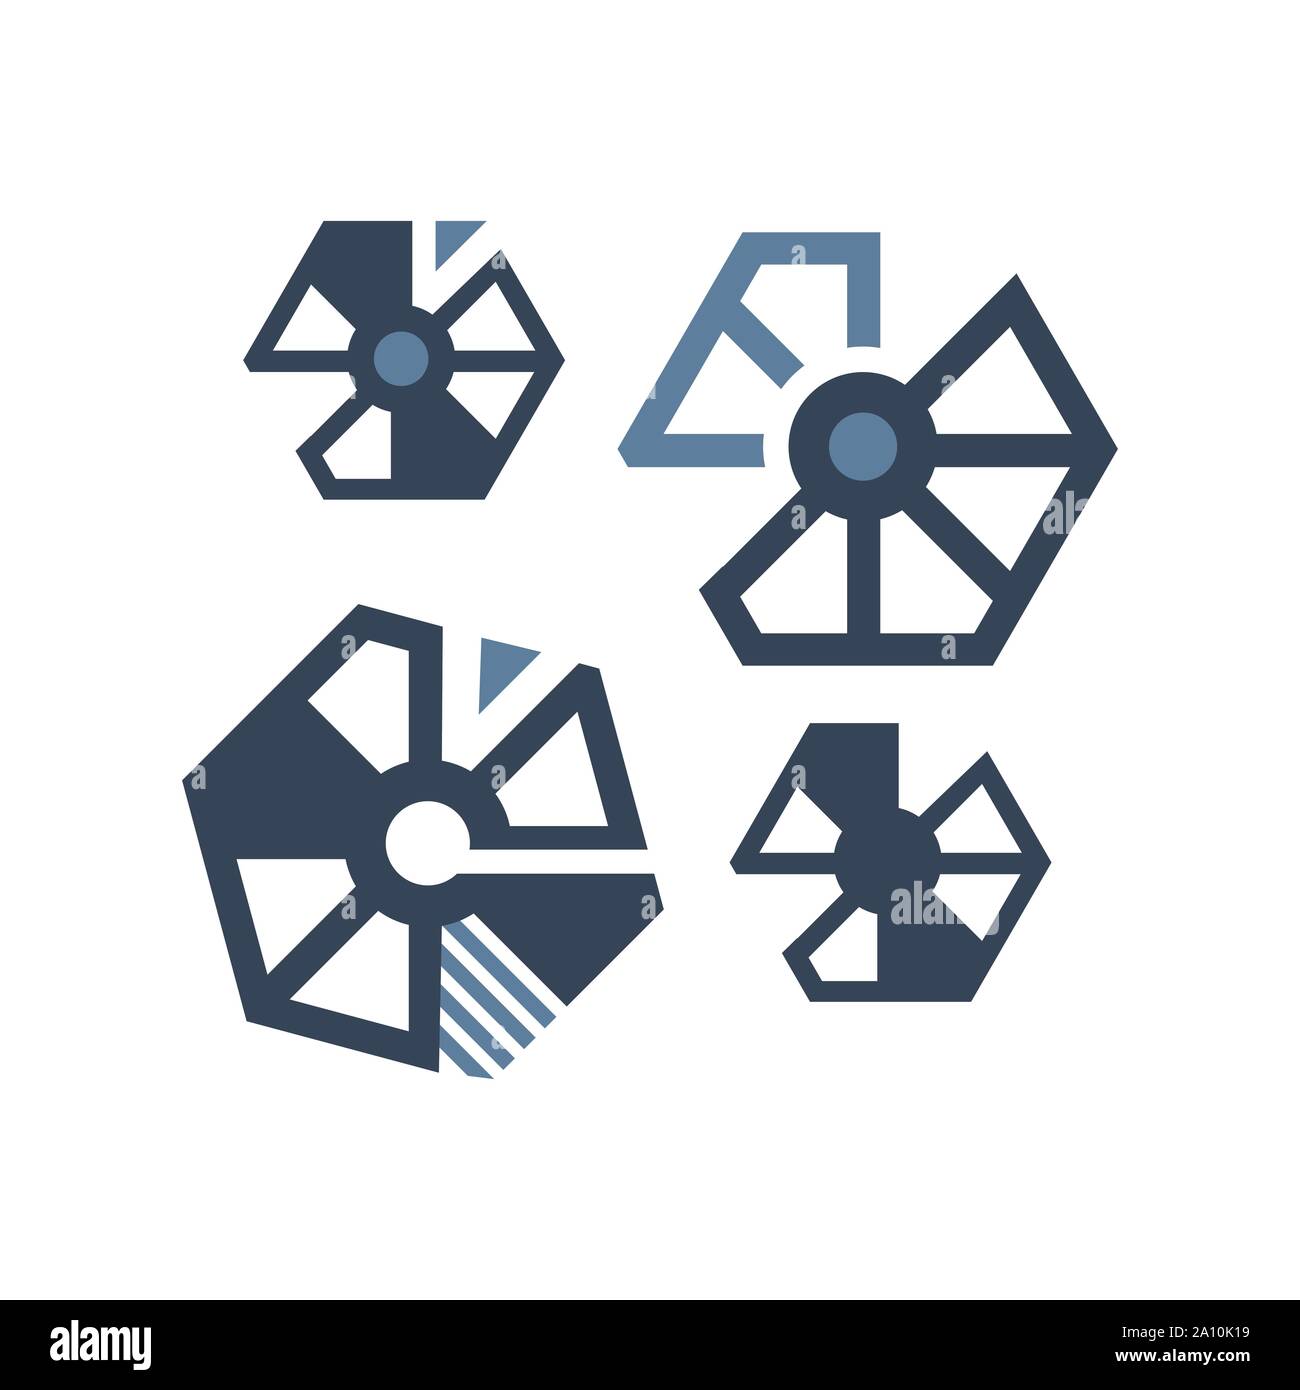 modern style geometric hexagonal logo design icon vector element Stock Vector